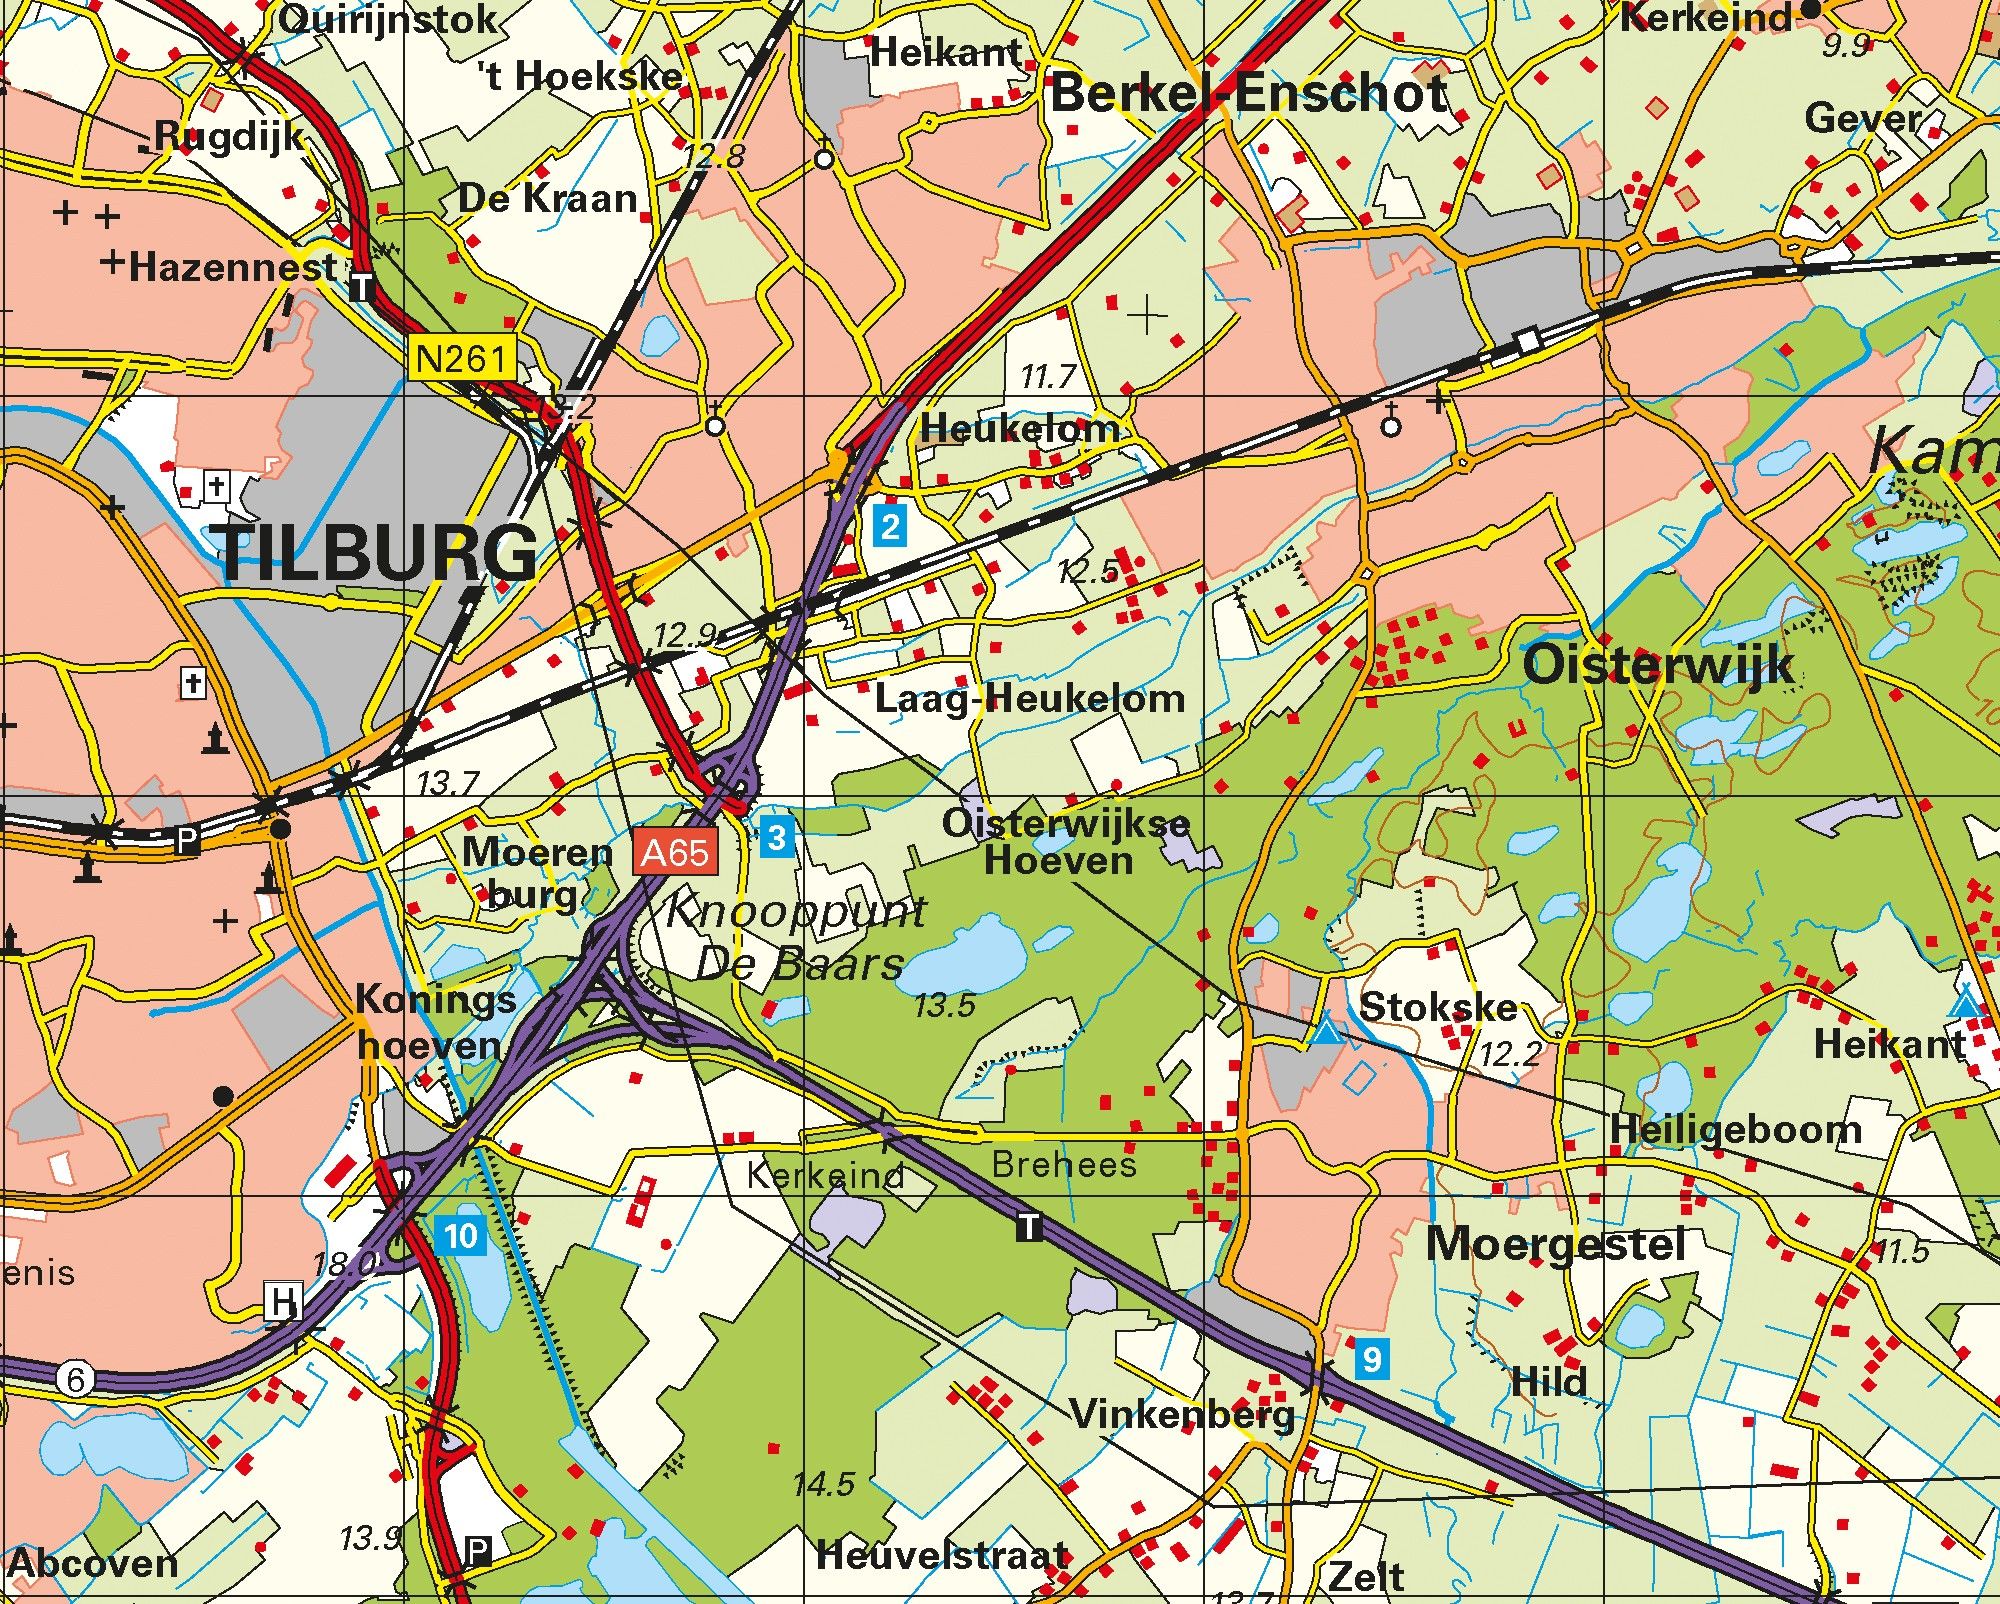 Digitale Provinciekaart Noord Brabant 1:100.000